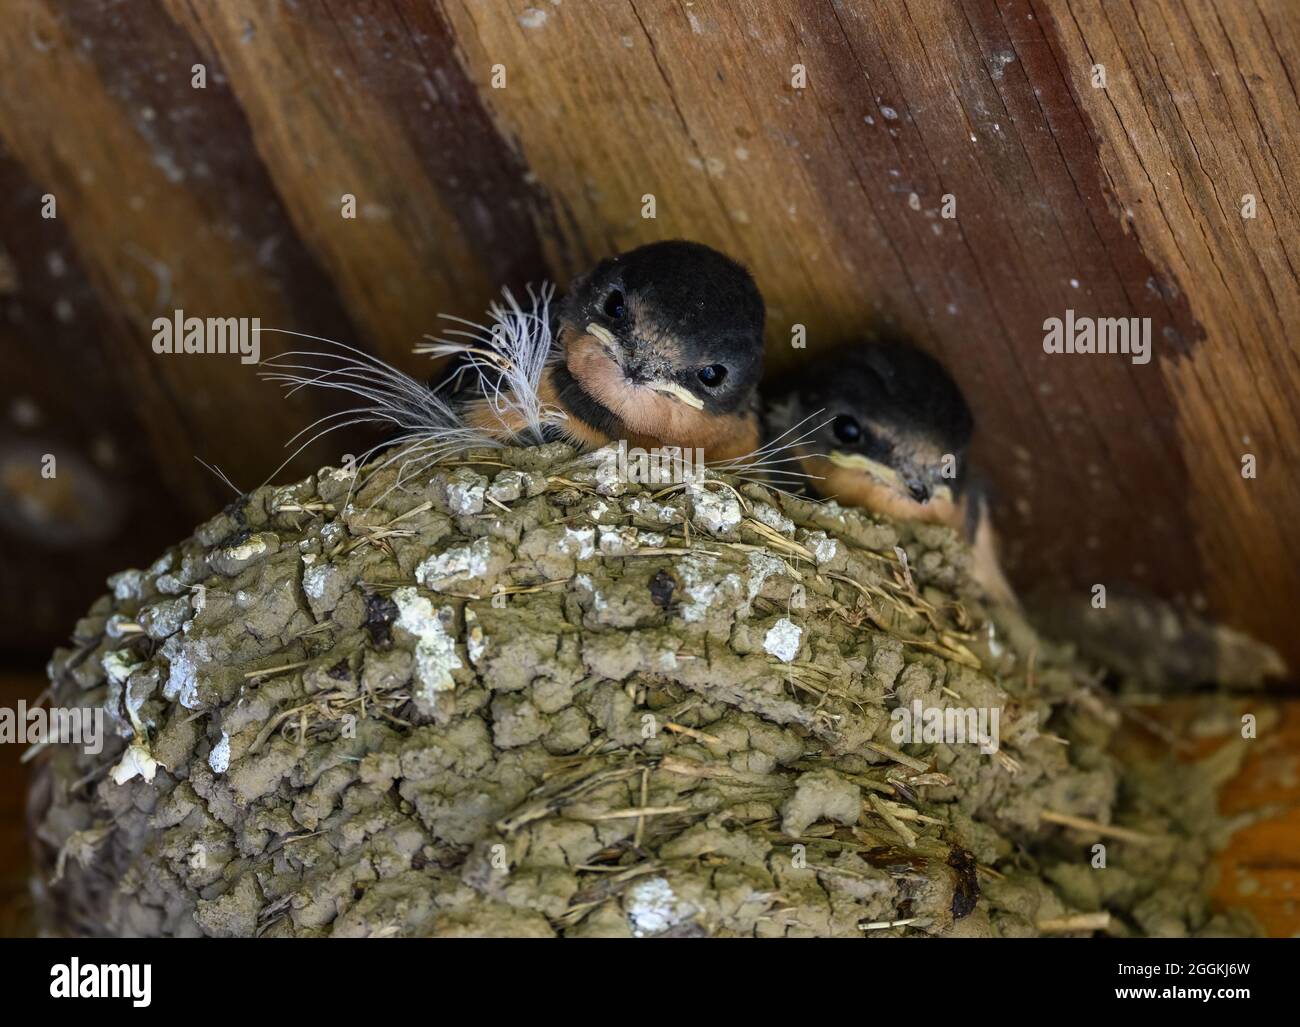 Barn Swallow (Hirundo rustica) chicks in their mud nest. Portalnd, Oregon, USA. Stock Photo